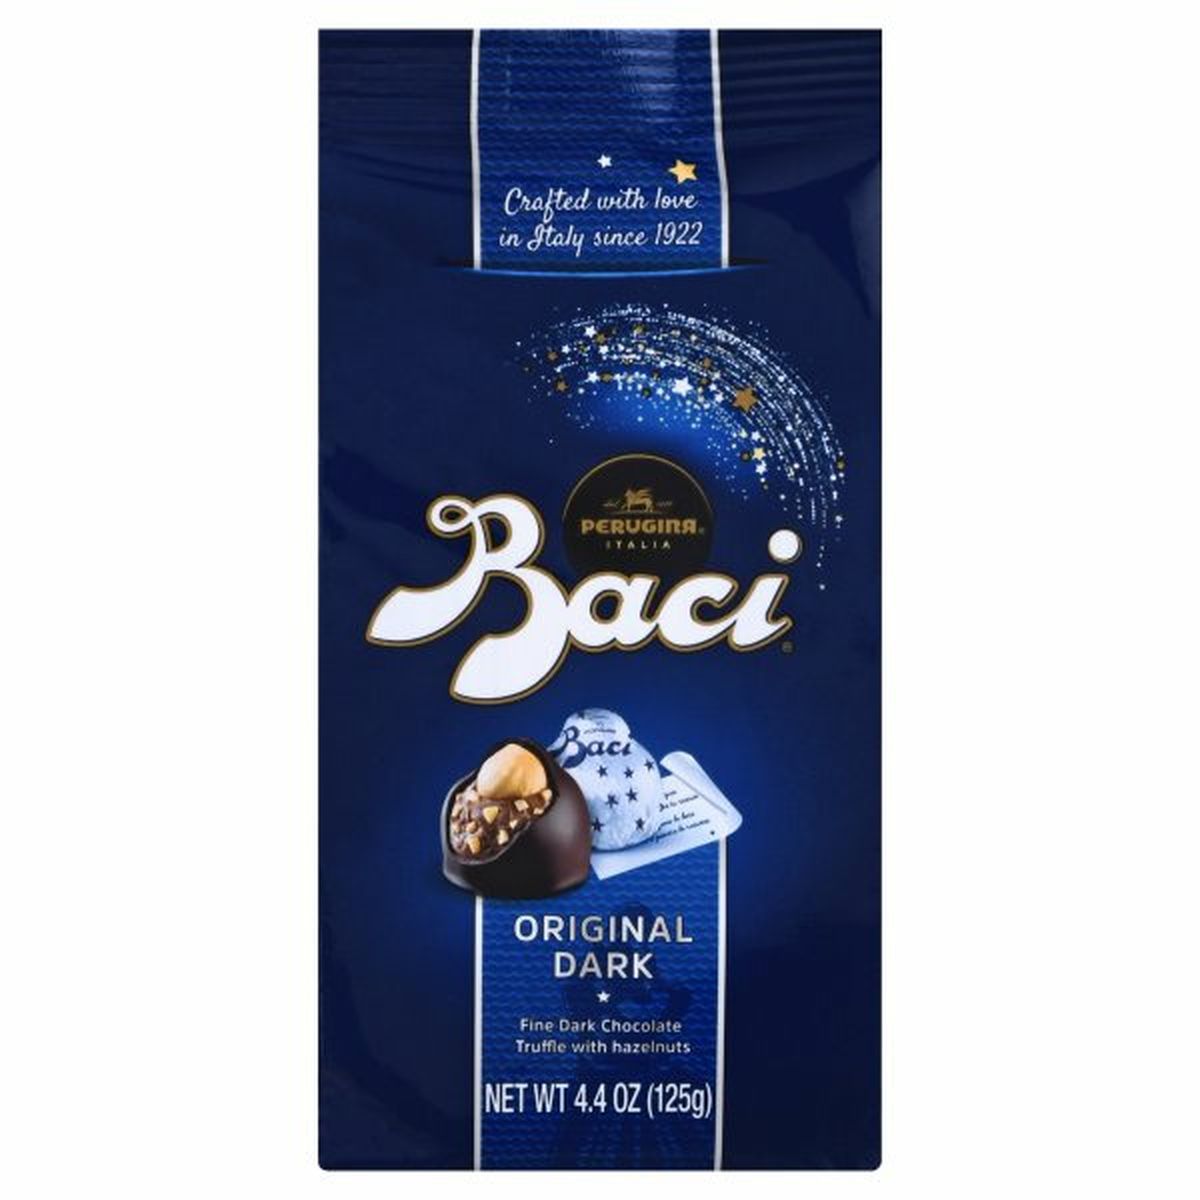 Calories in Baci Perugina Chocolate Truffle, Original Dark